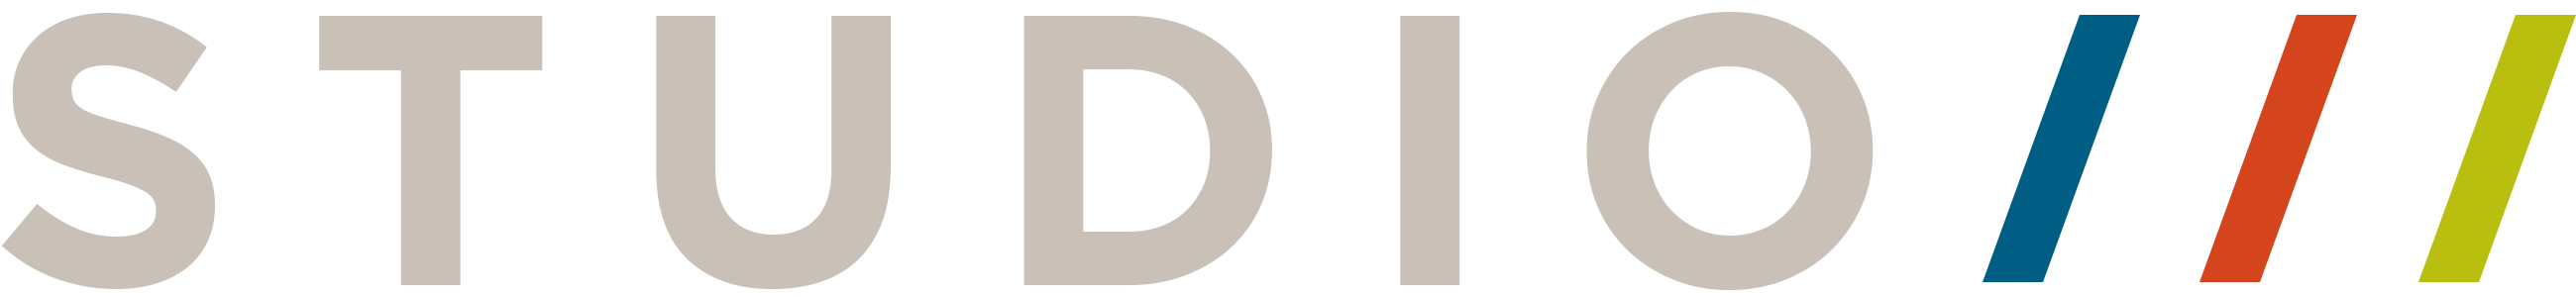 Studio Three logo